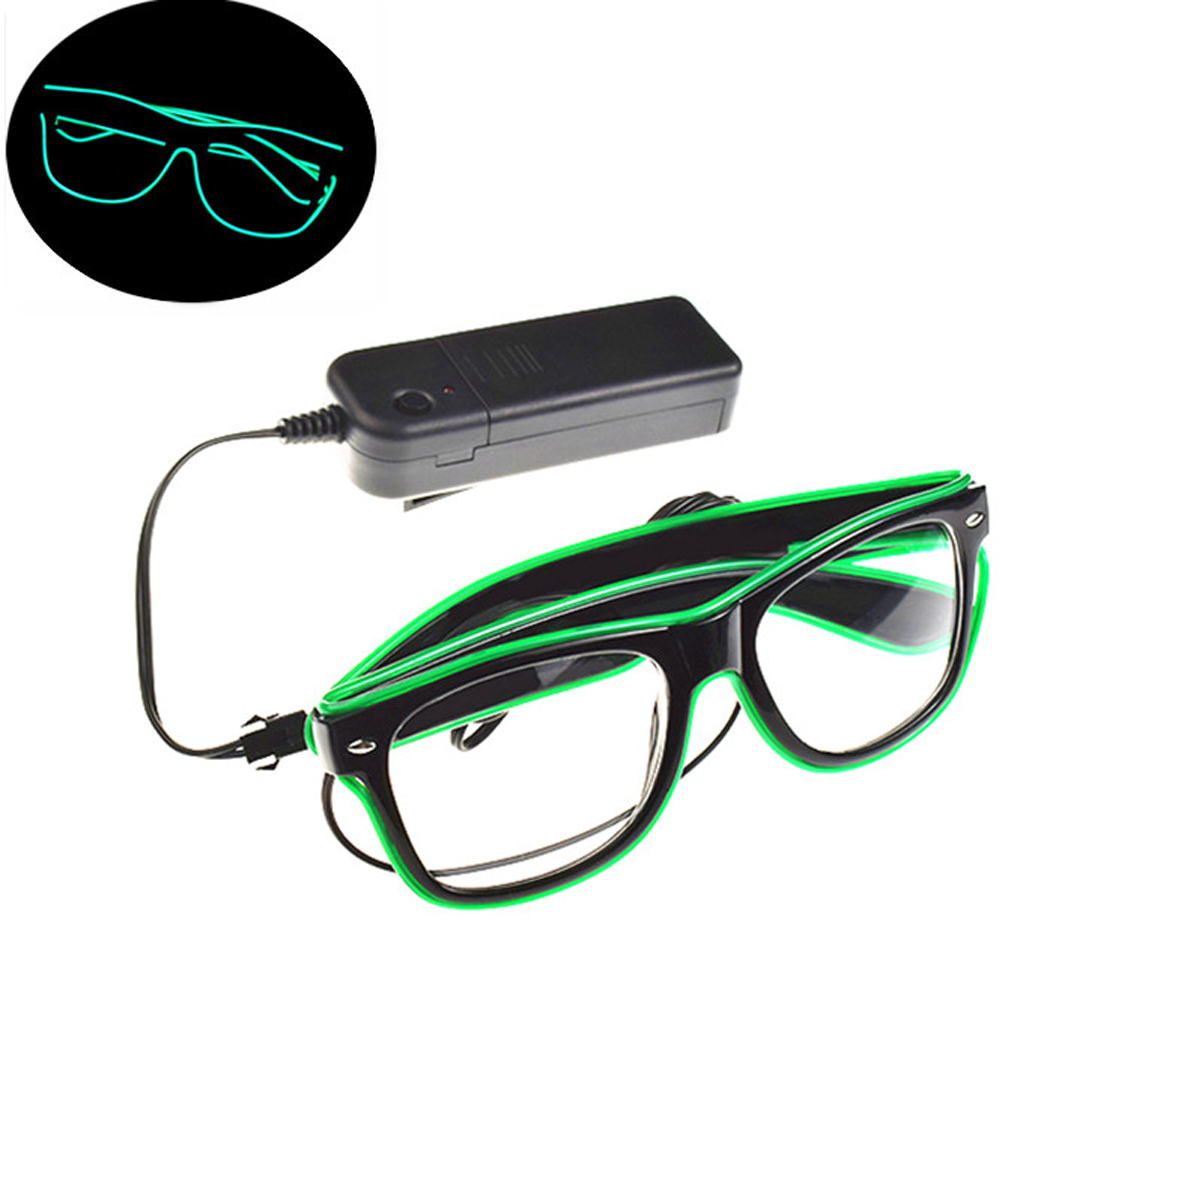 

LED Flashing Sunglasses EL Wire Glasses Glow Party Nightculb Festival Eyewear